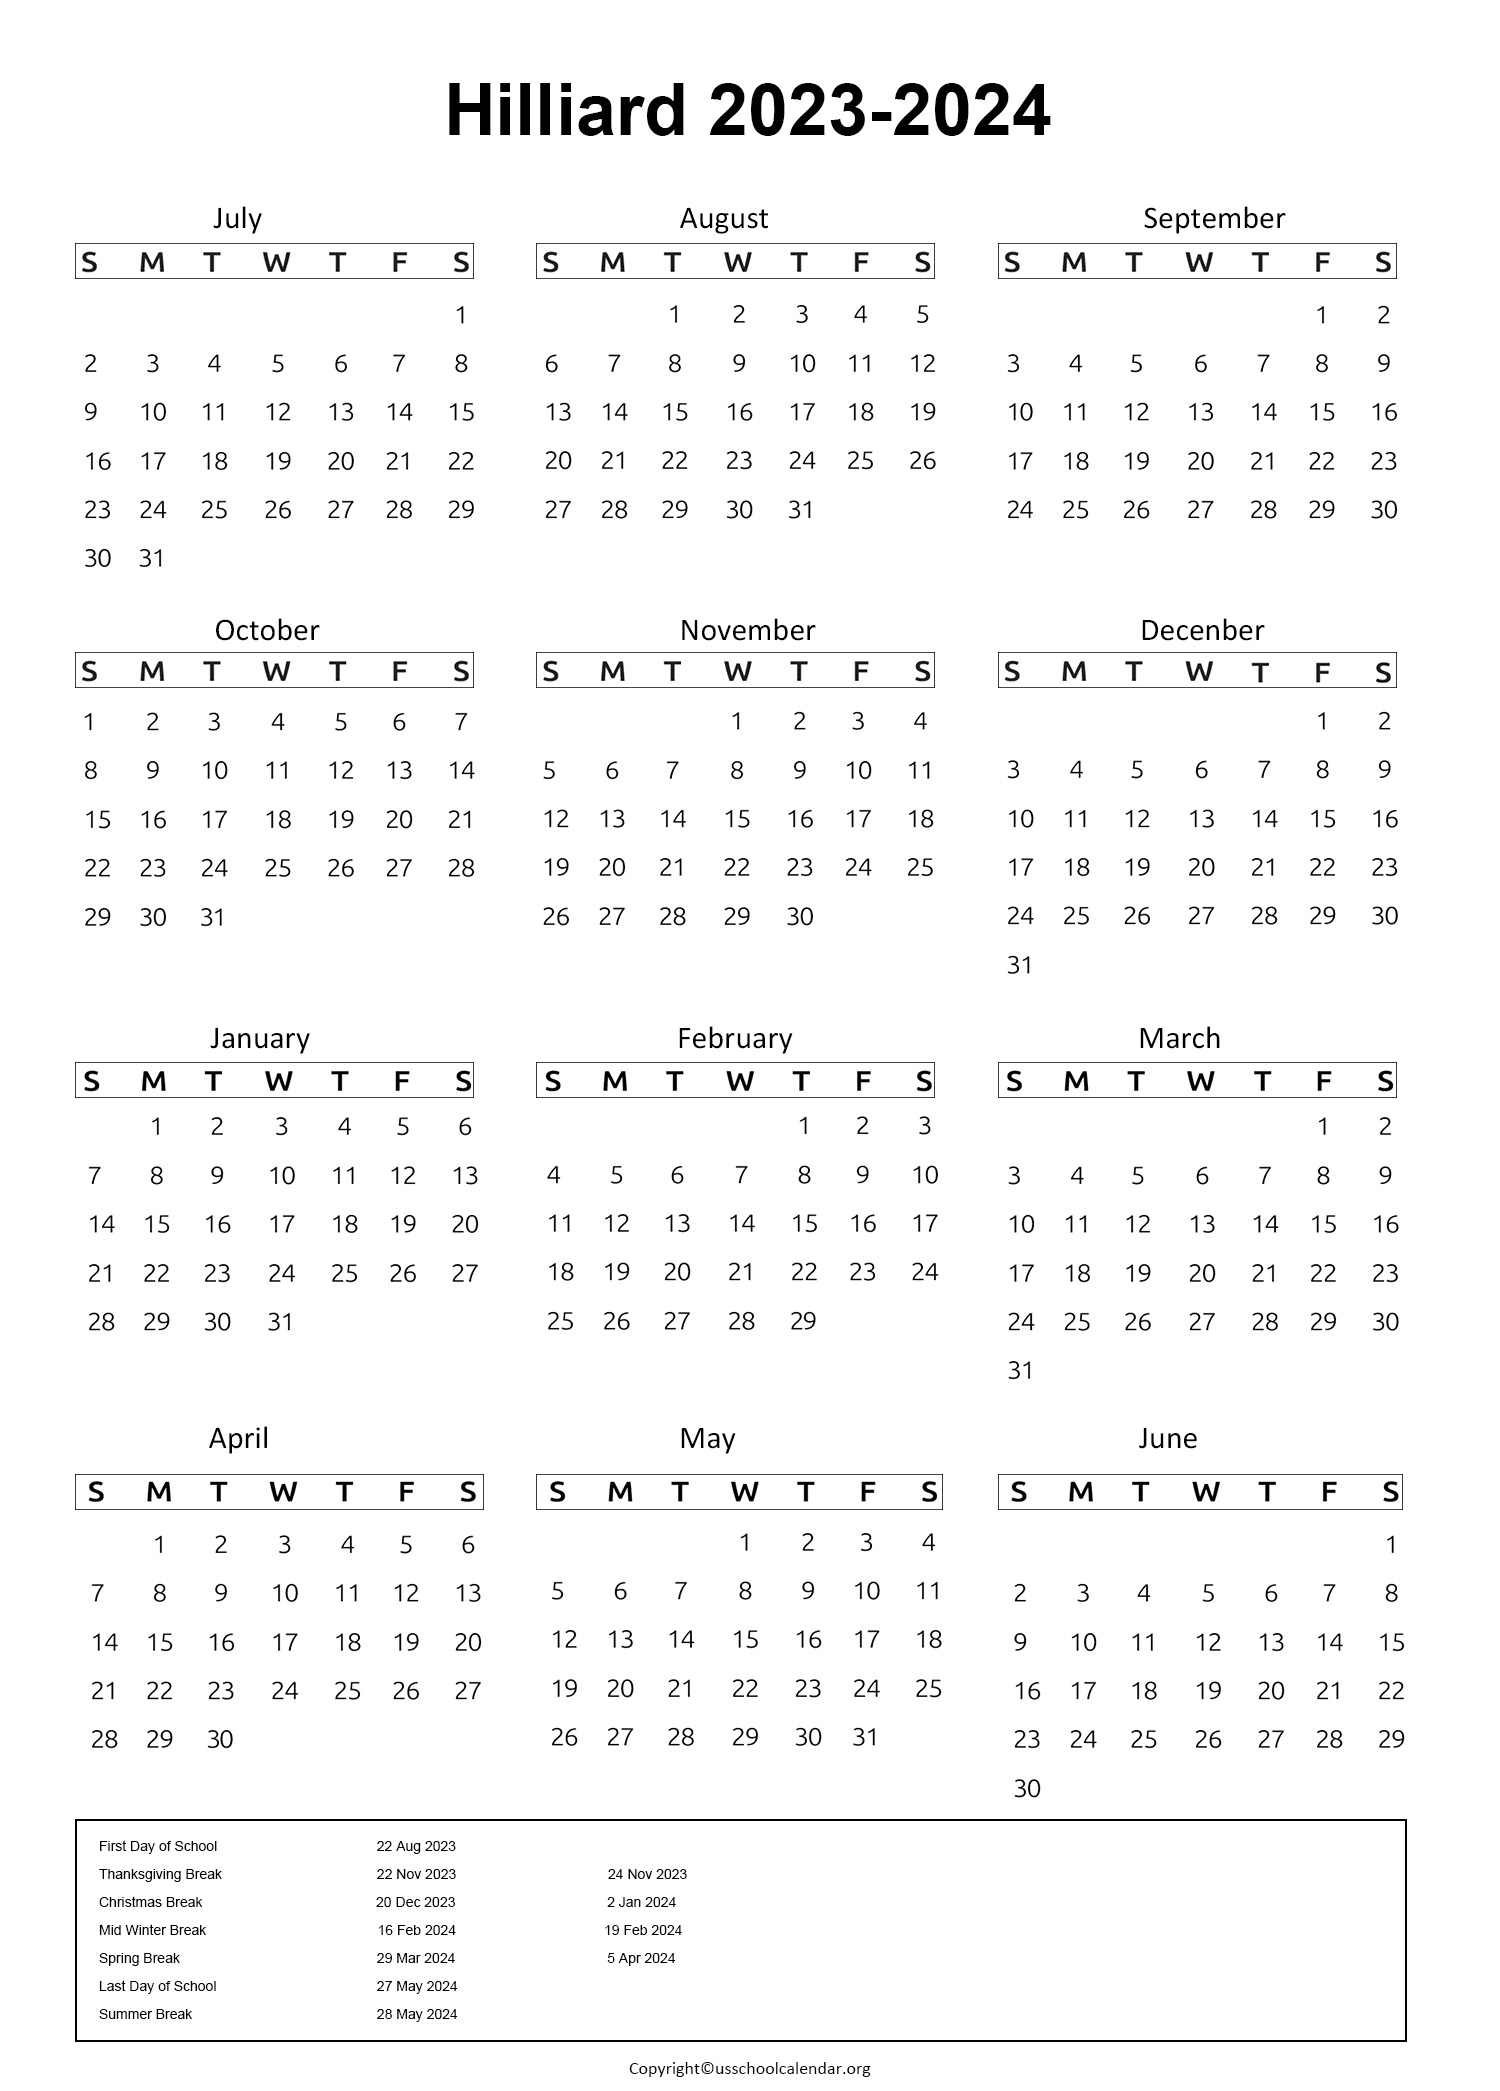 Hilliard City School System Calendar US School Calendar